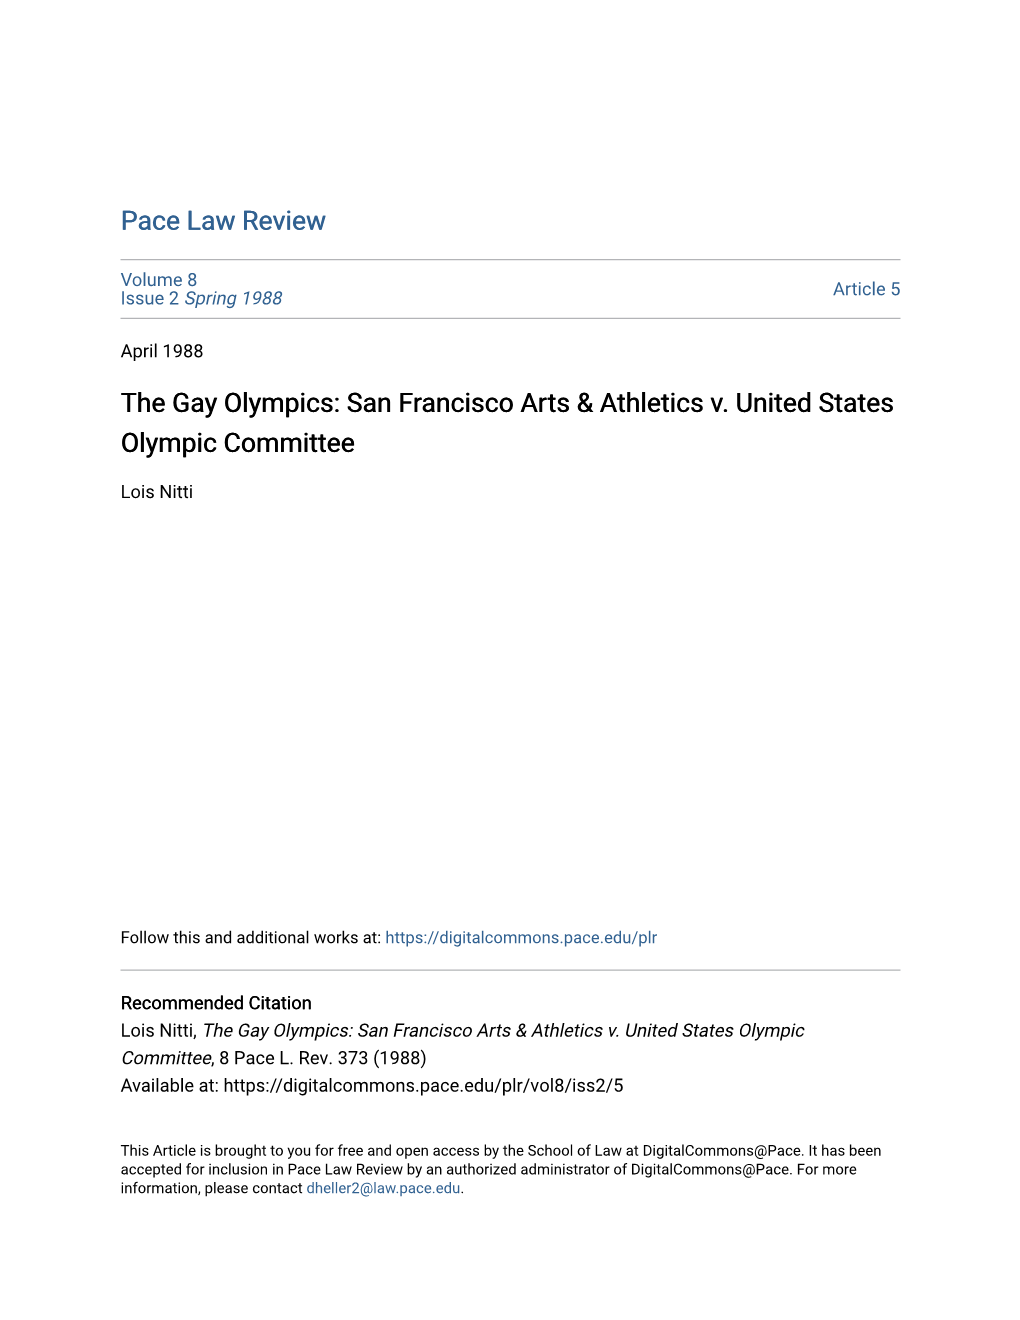 San Francisco Arts & Athletics V. United States Olympic Committee